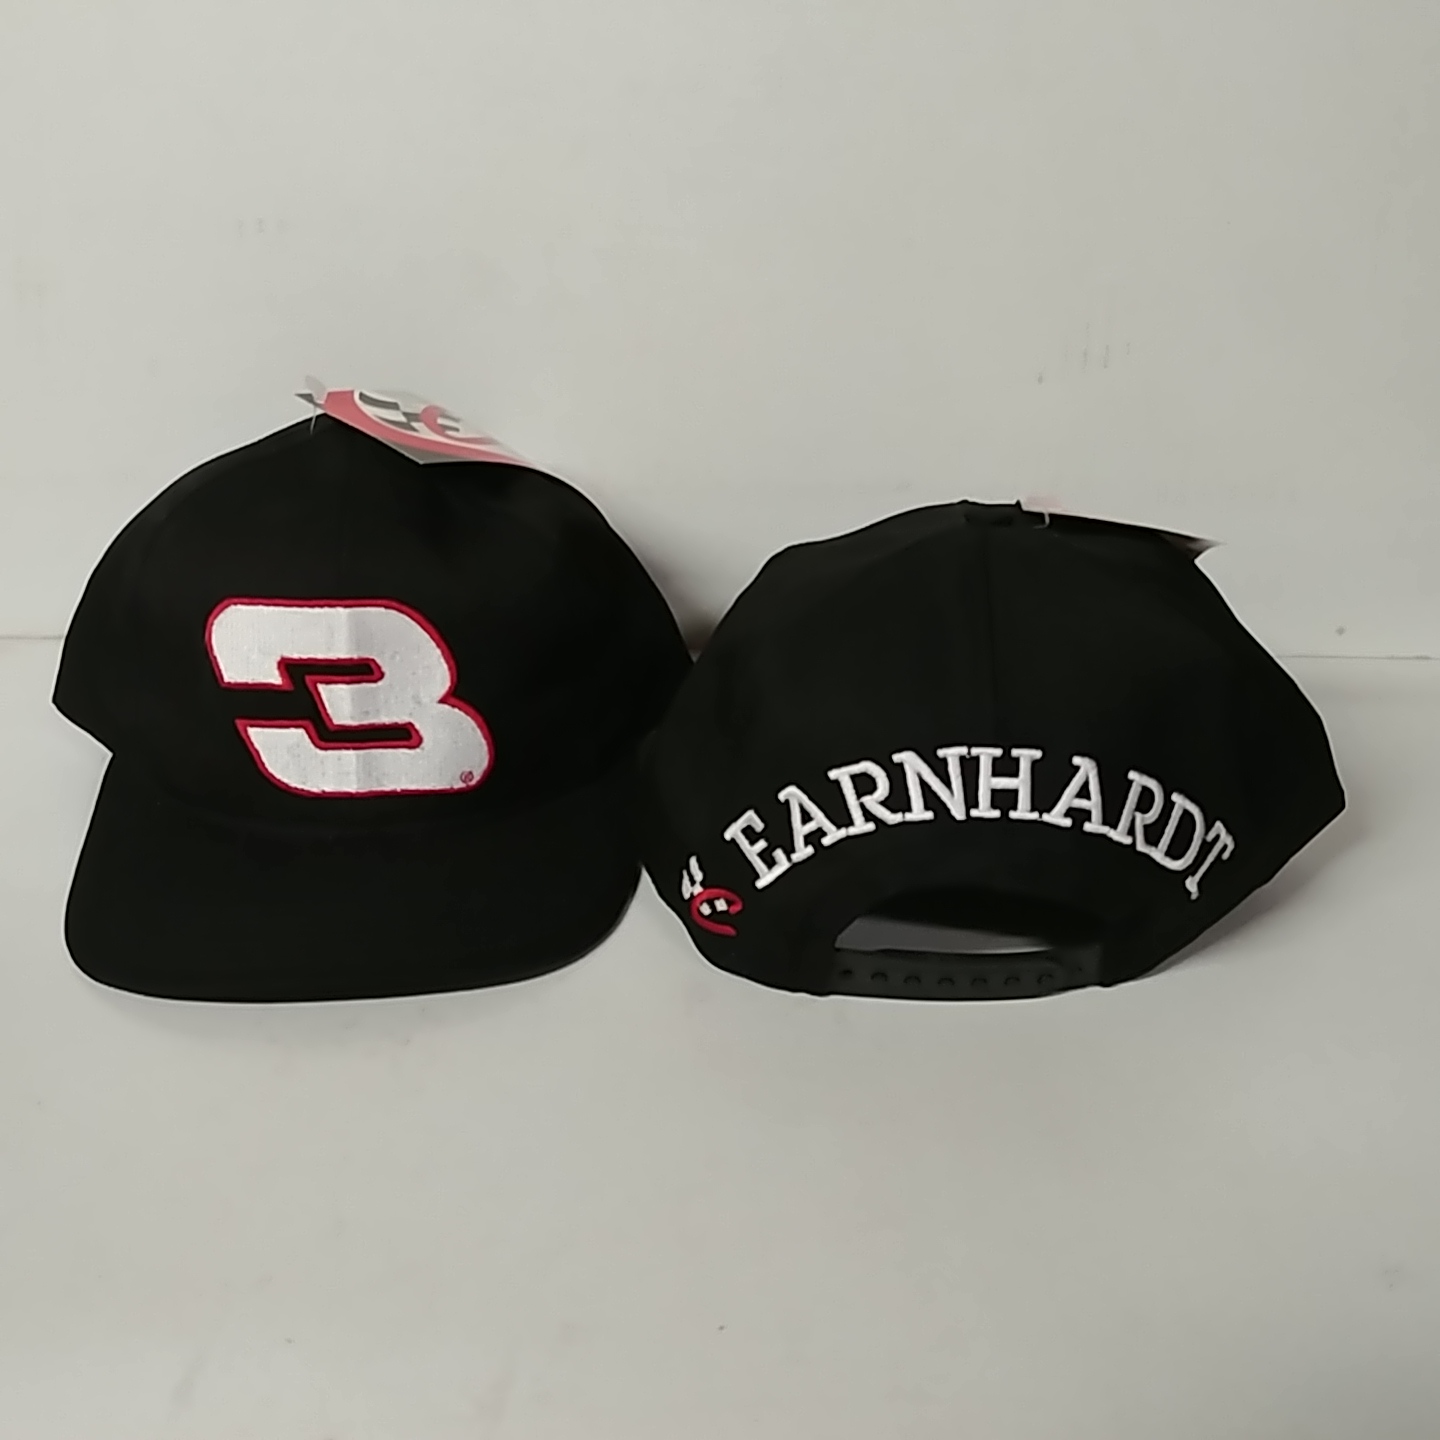 2001 Dale Earnhardt Big 3 cap